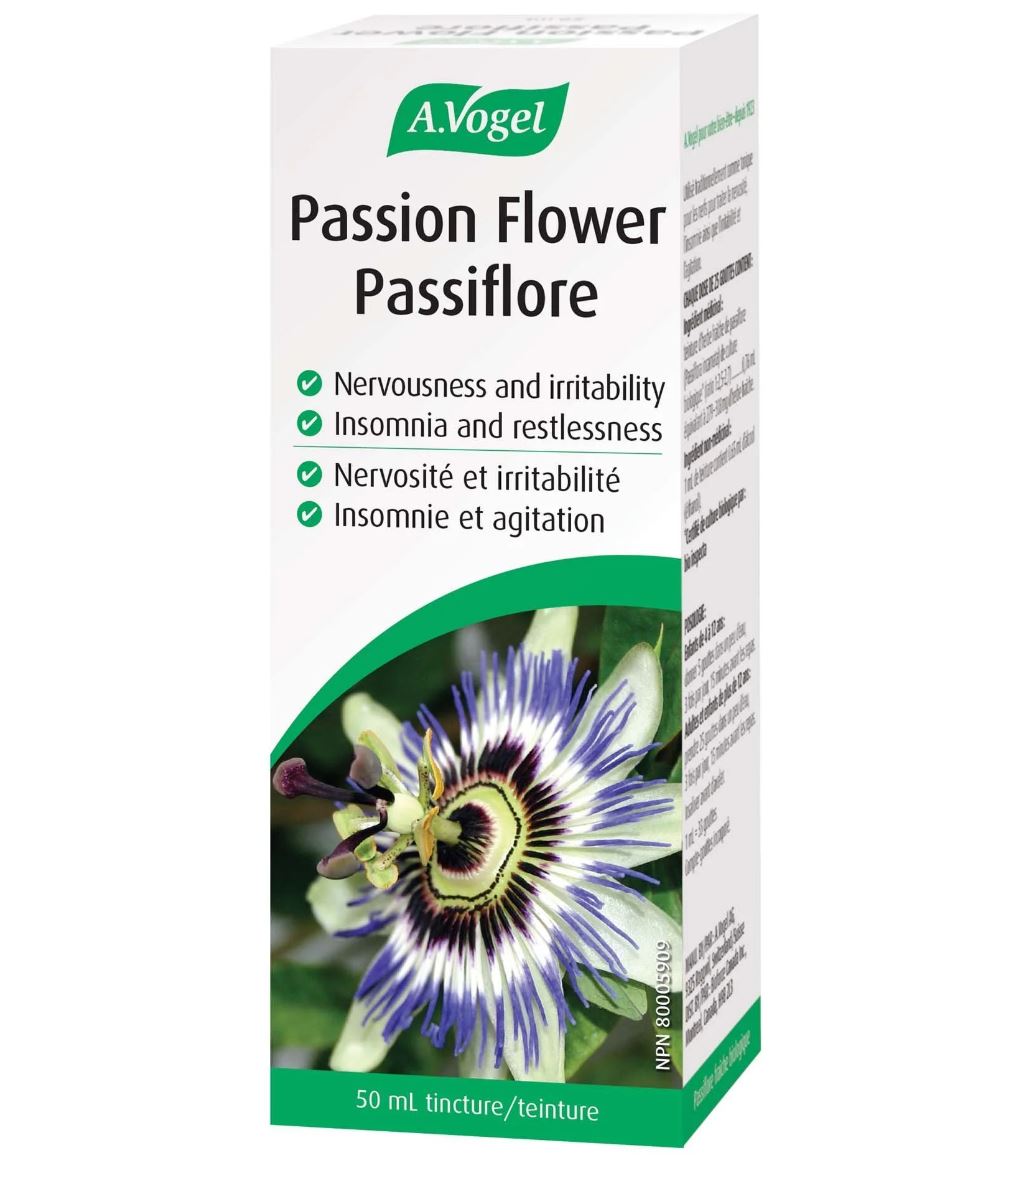 A.Vogel Passion Flower - Multi-use Nerve Tonic 50 mL